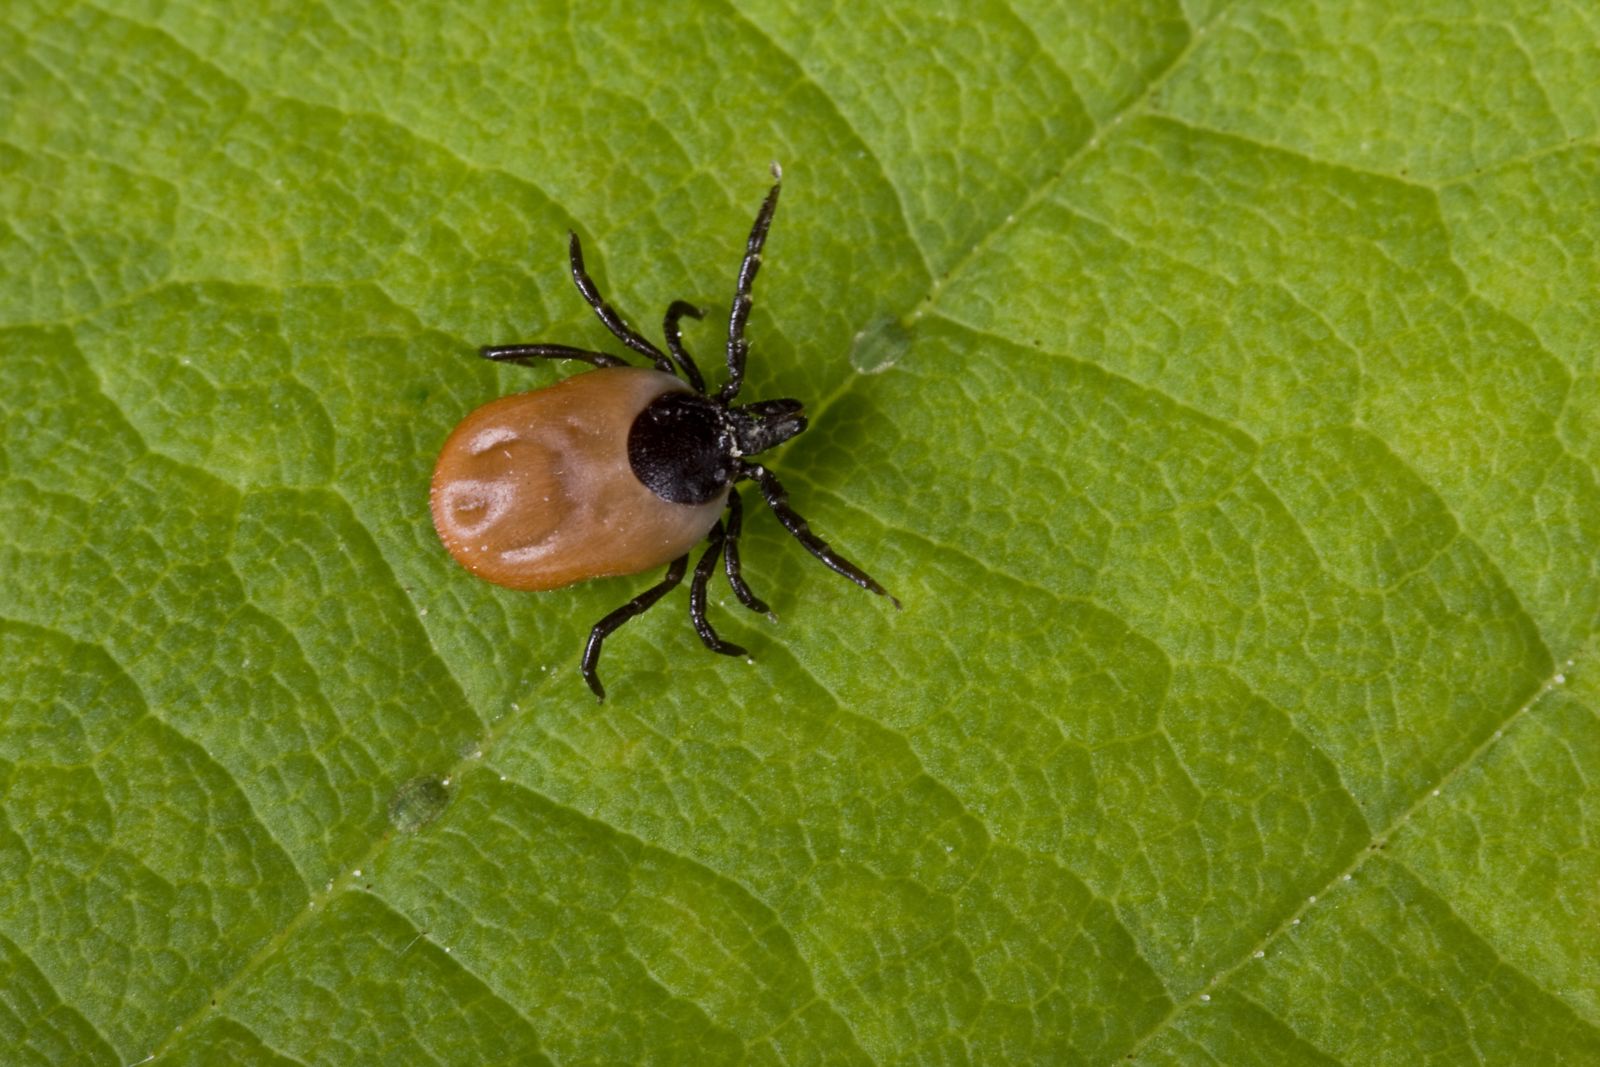 Close up of a tick on a leaf.